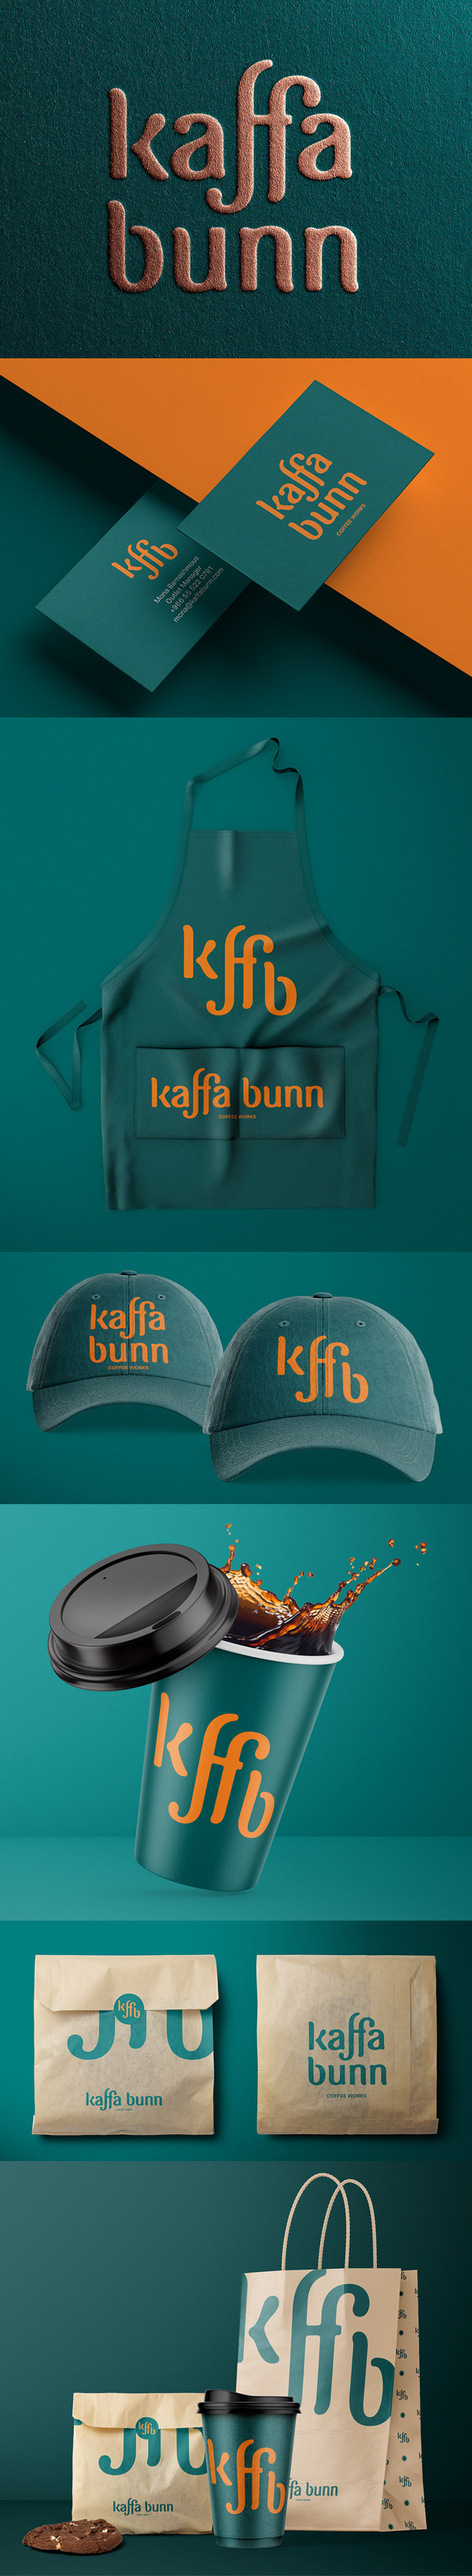 Kaffa Bunn Coffee Branding Identity